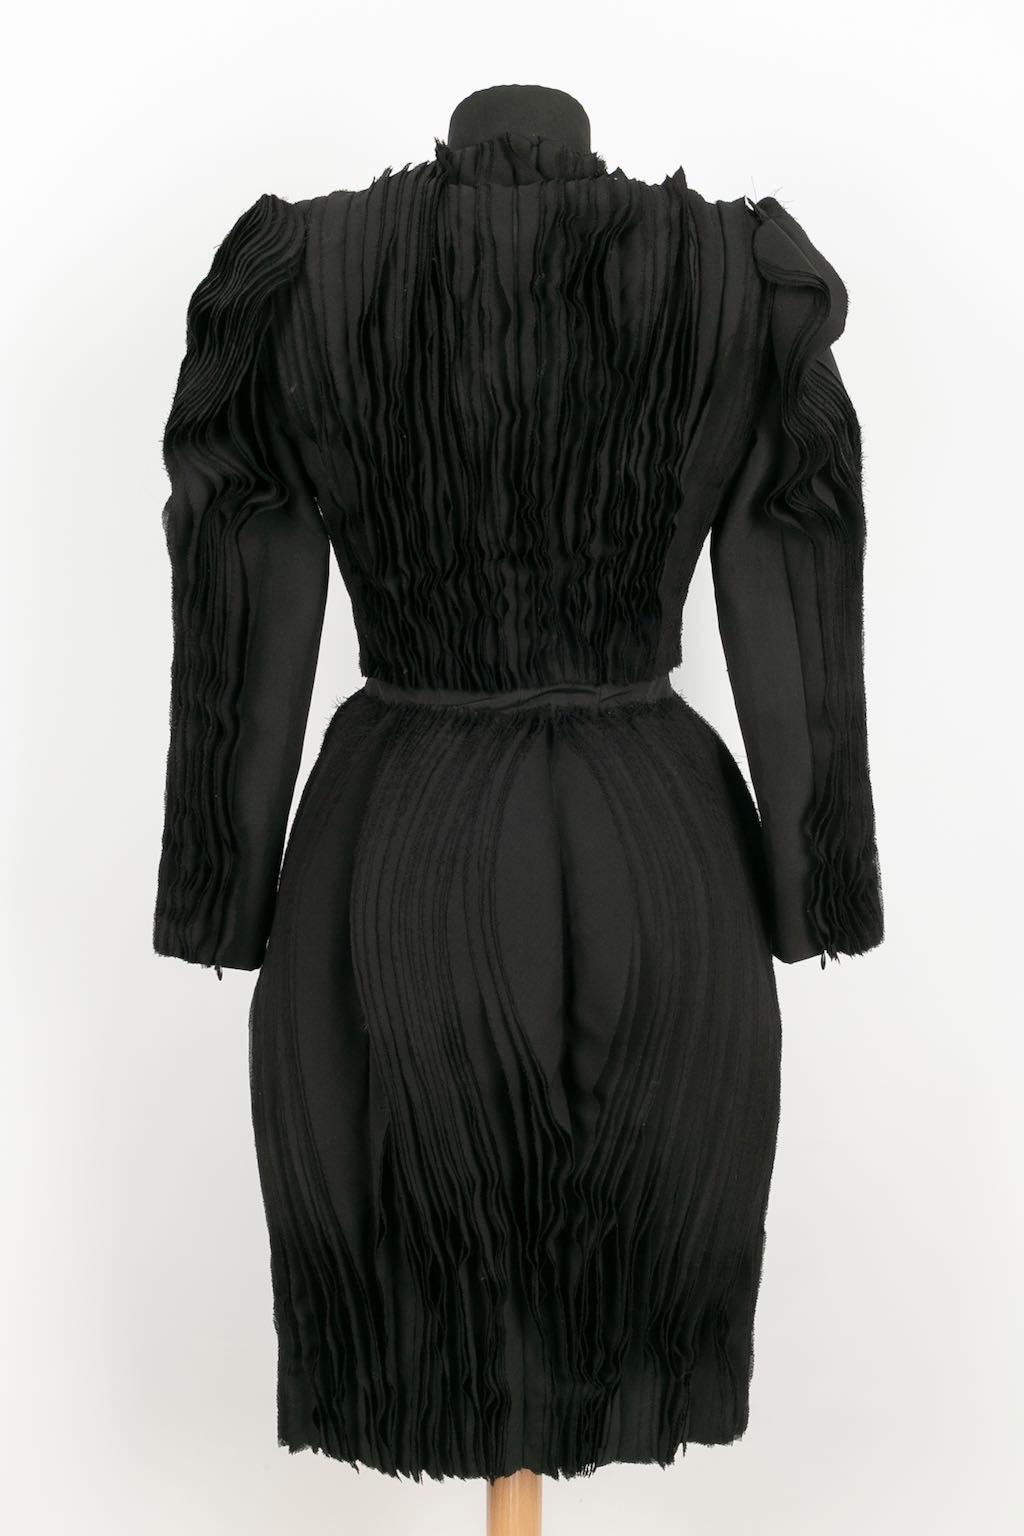 Incredible Boulle Dress Jean-Paul Gaultier Couture In Excellent Condition For Sale In SAINT-OUEN-SUR-SEINE, FR